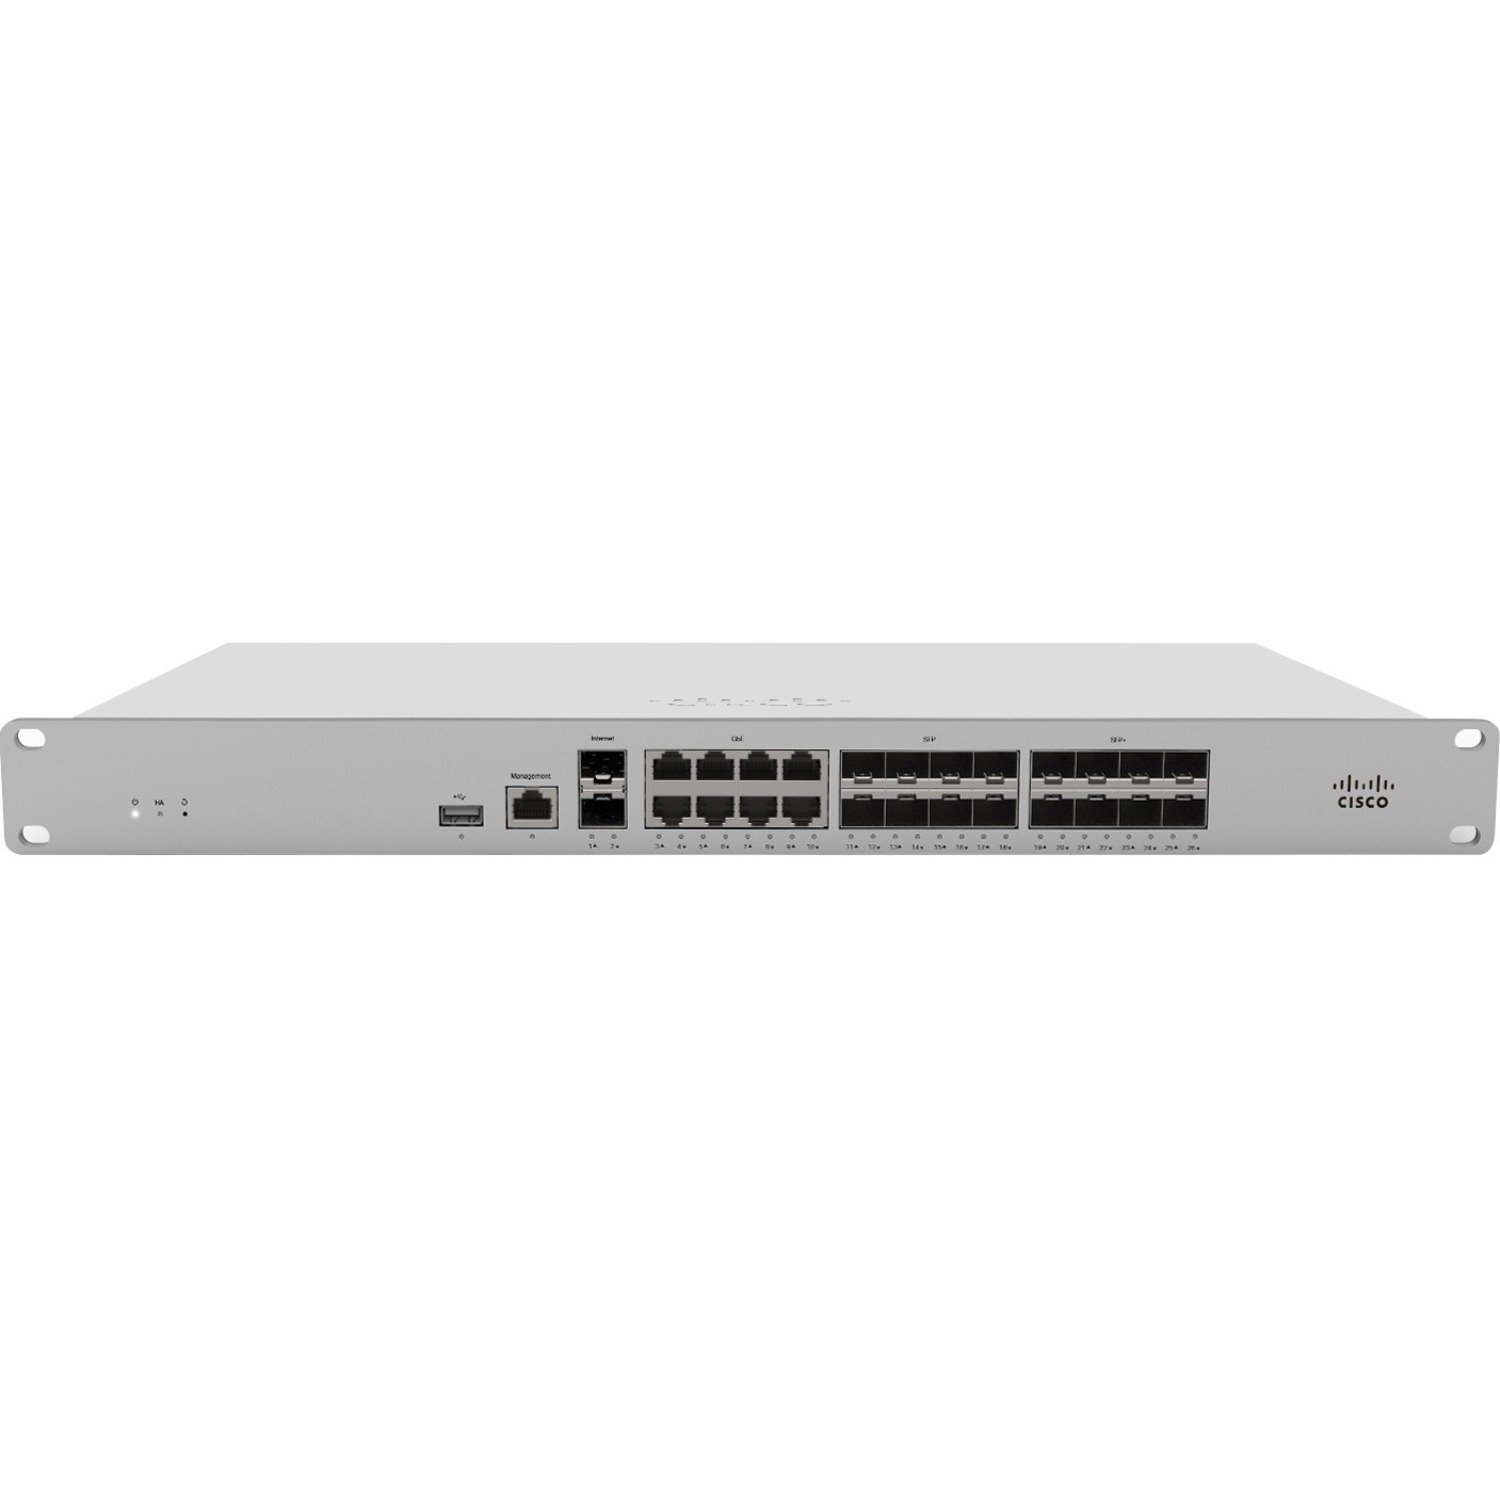 Cisco 250 Network Security/Firewall Appliance